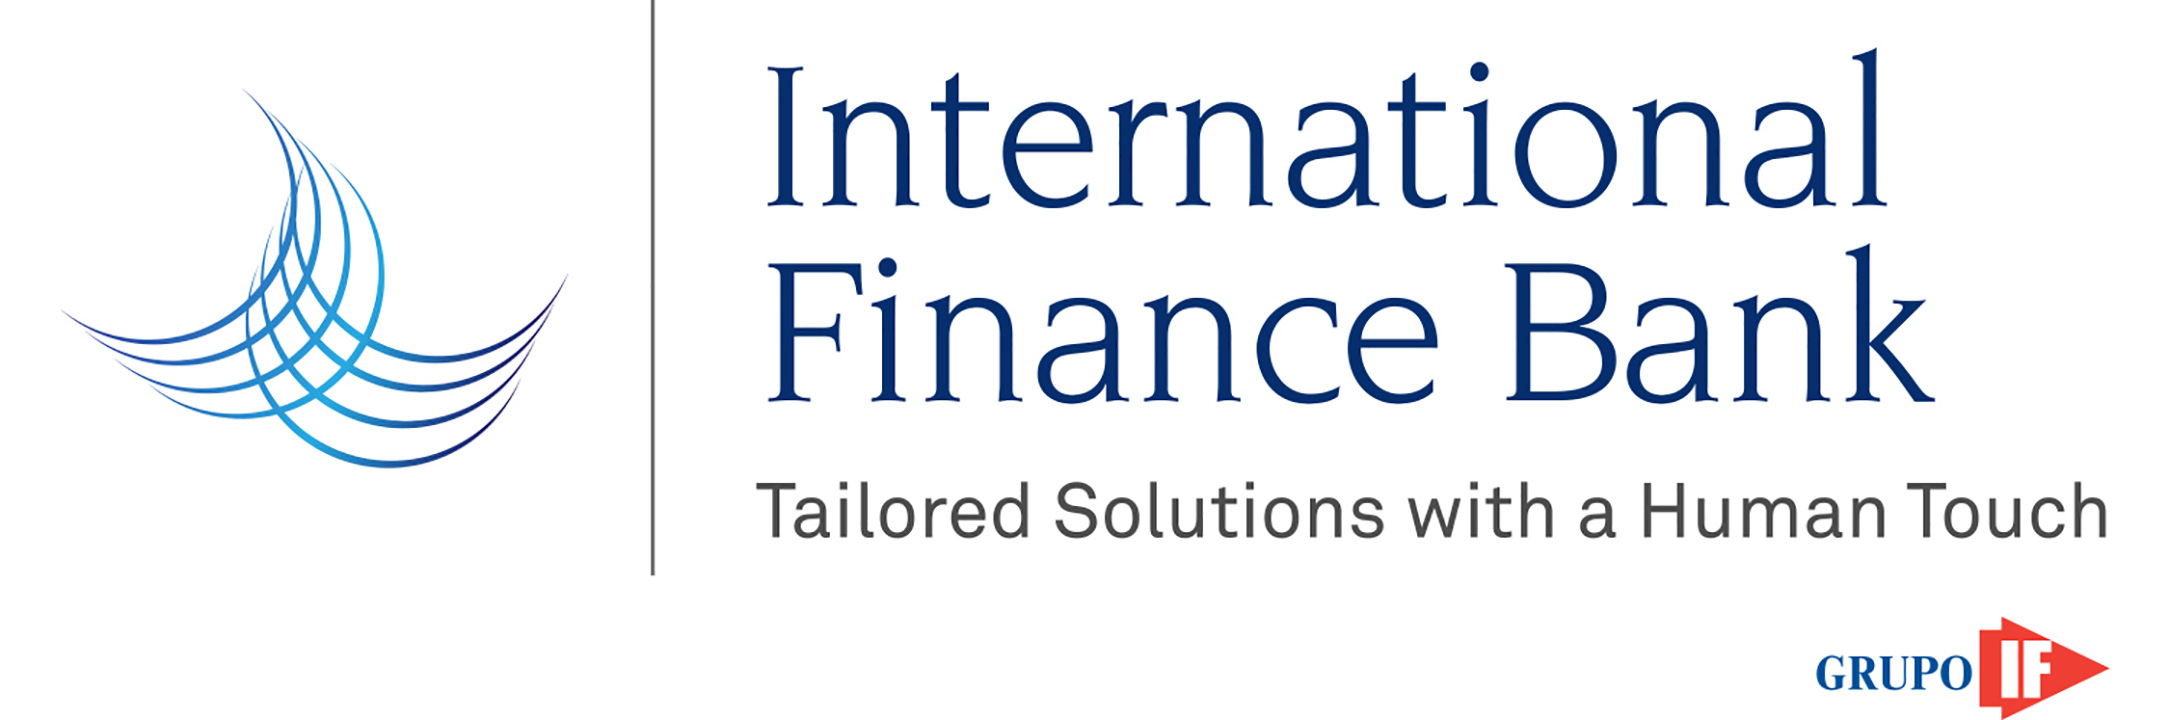 Trustee International Finance Bank